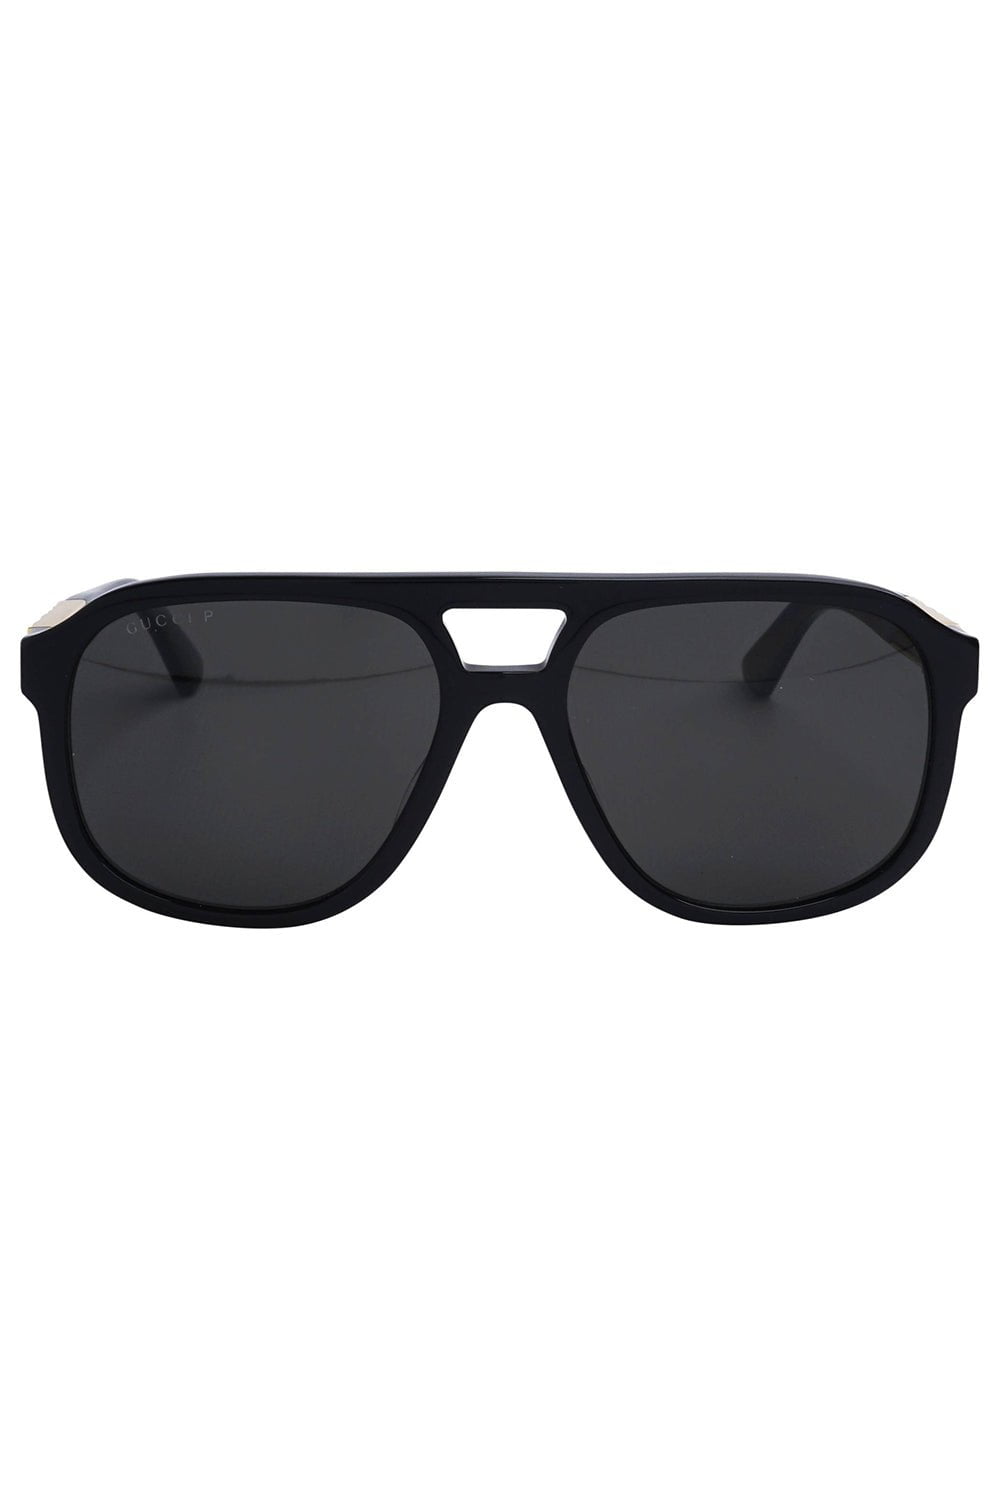 GUCCI-Mask Sunglasses-BLACK/GREY